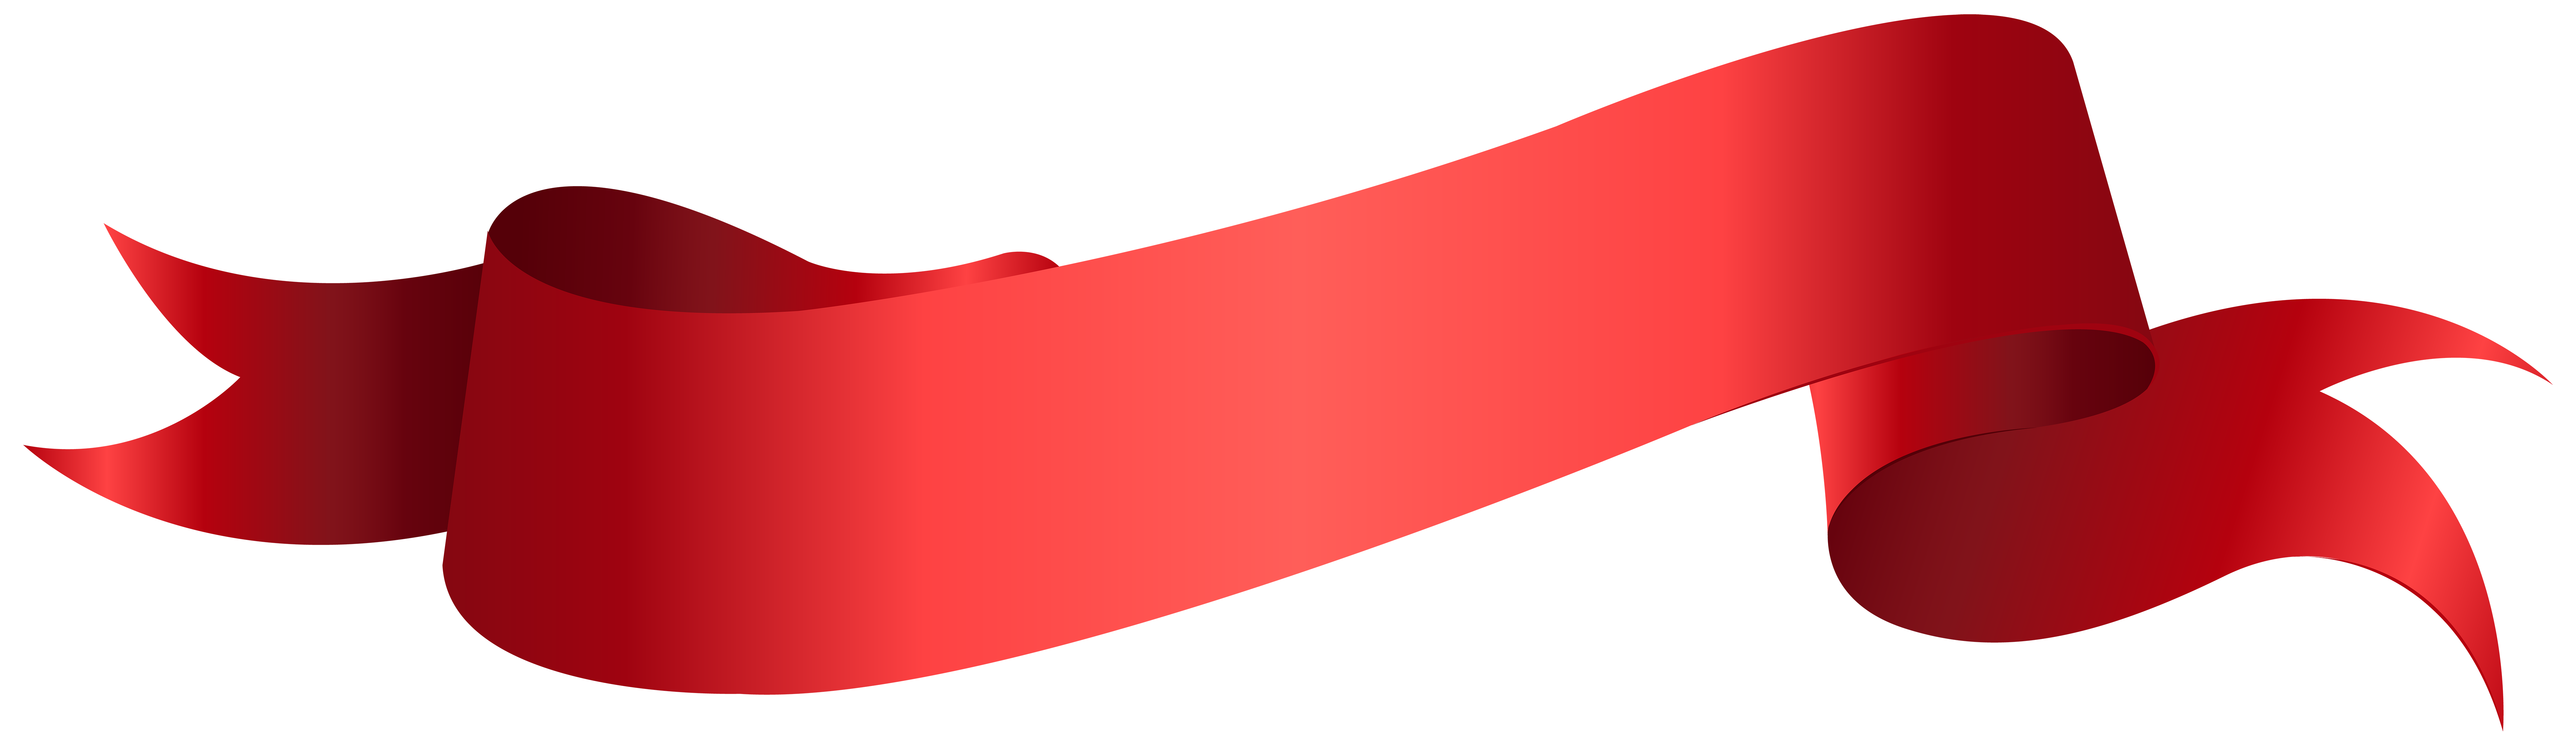 red banner clip art